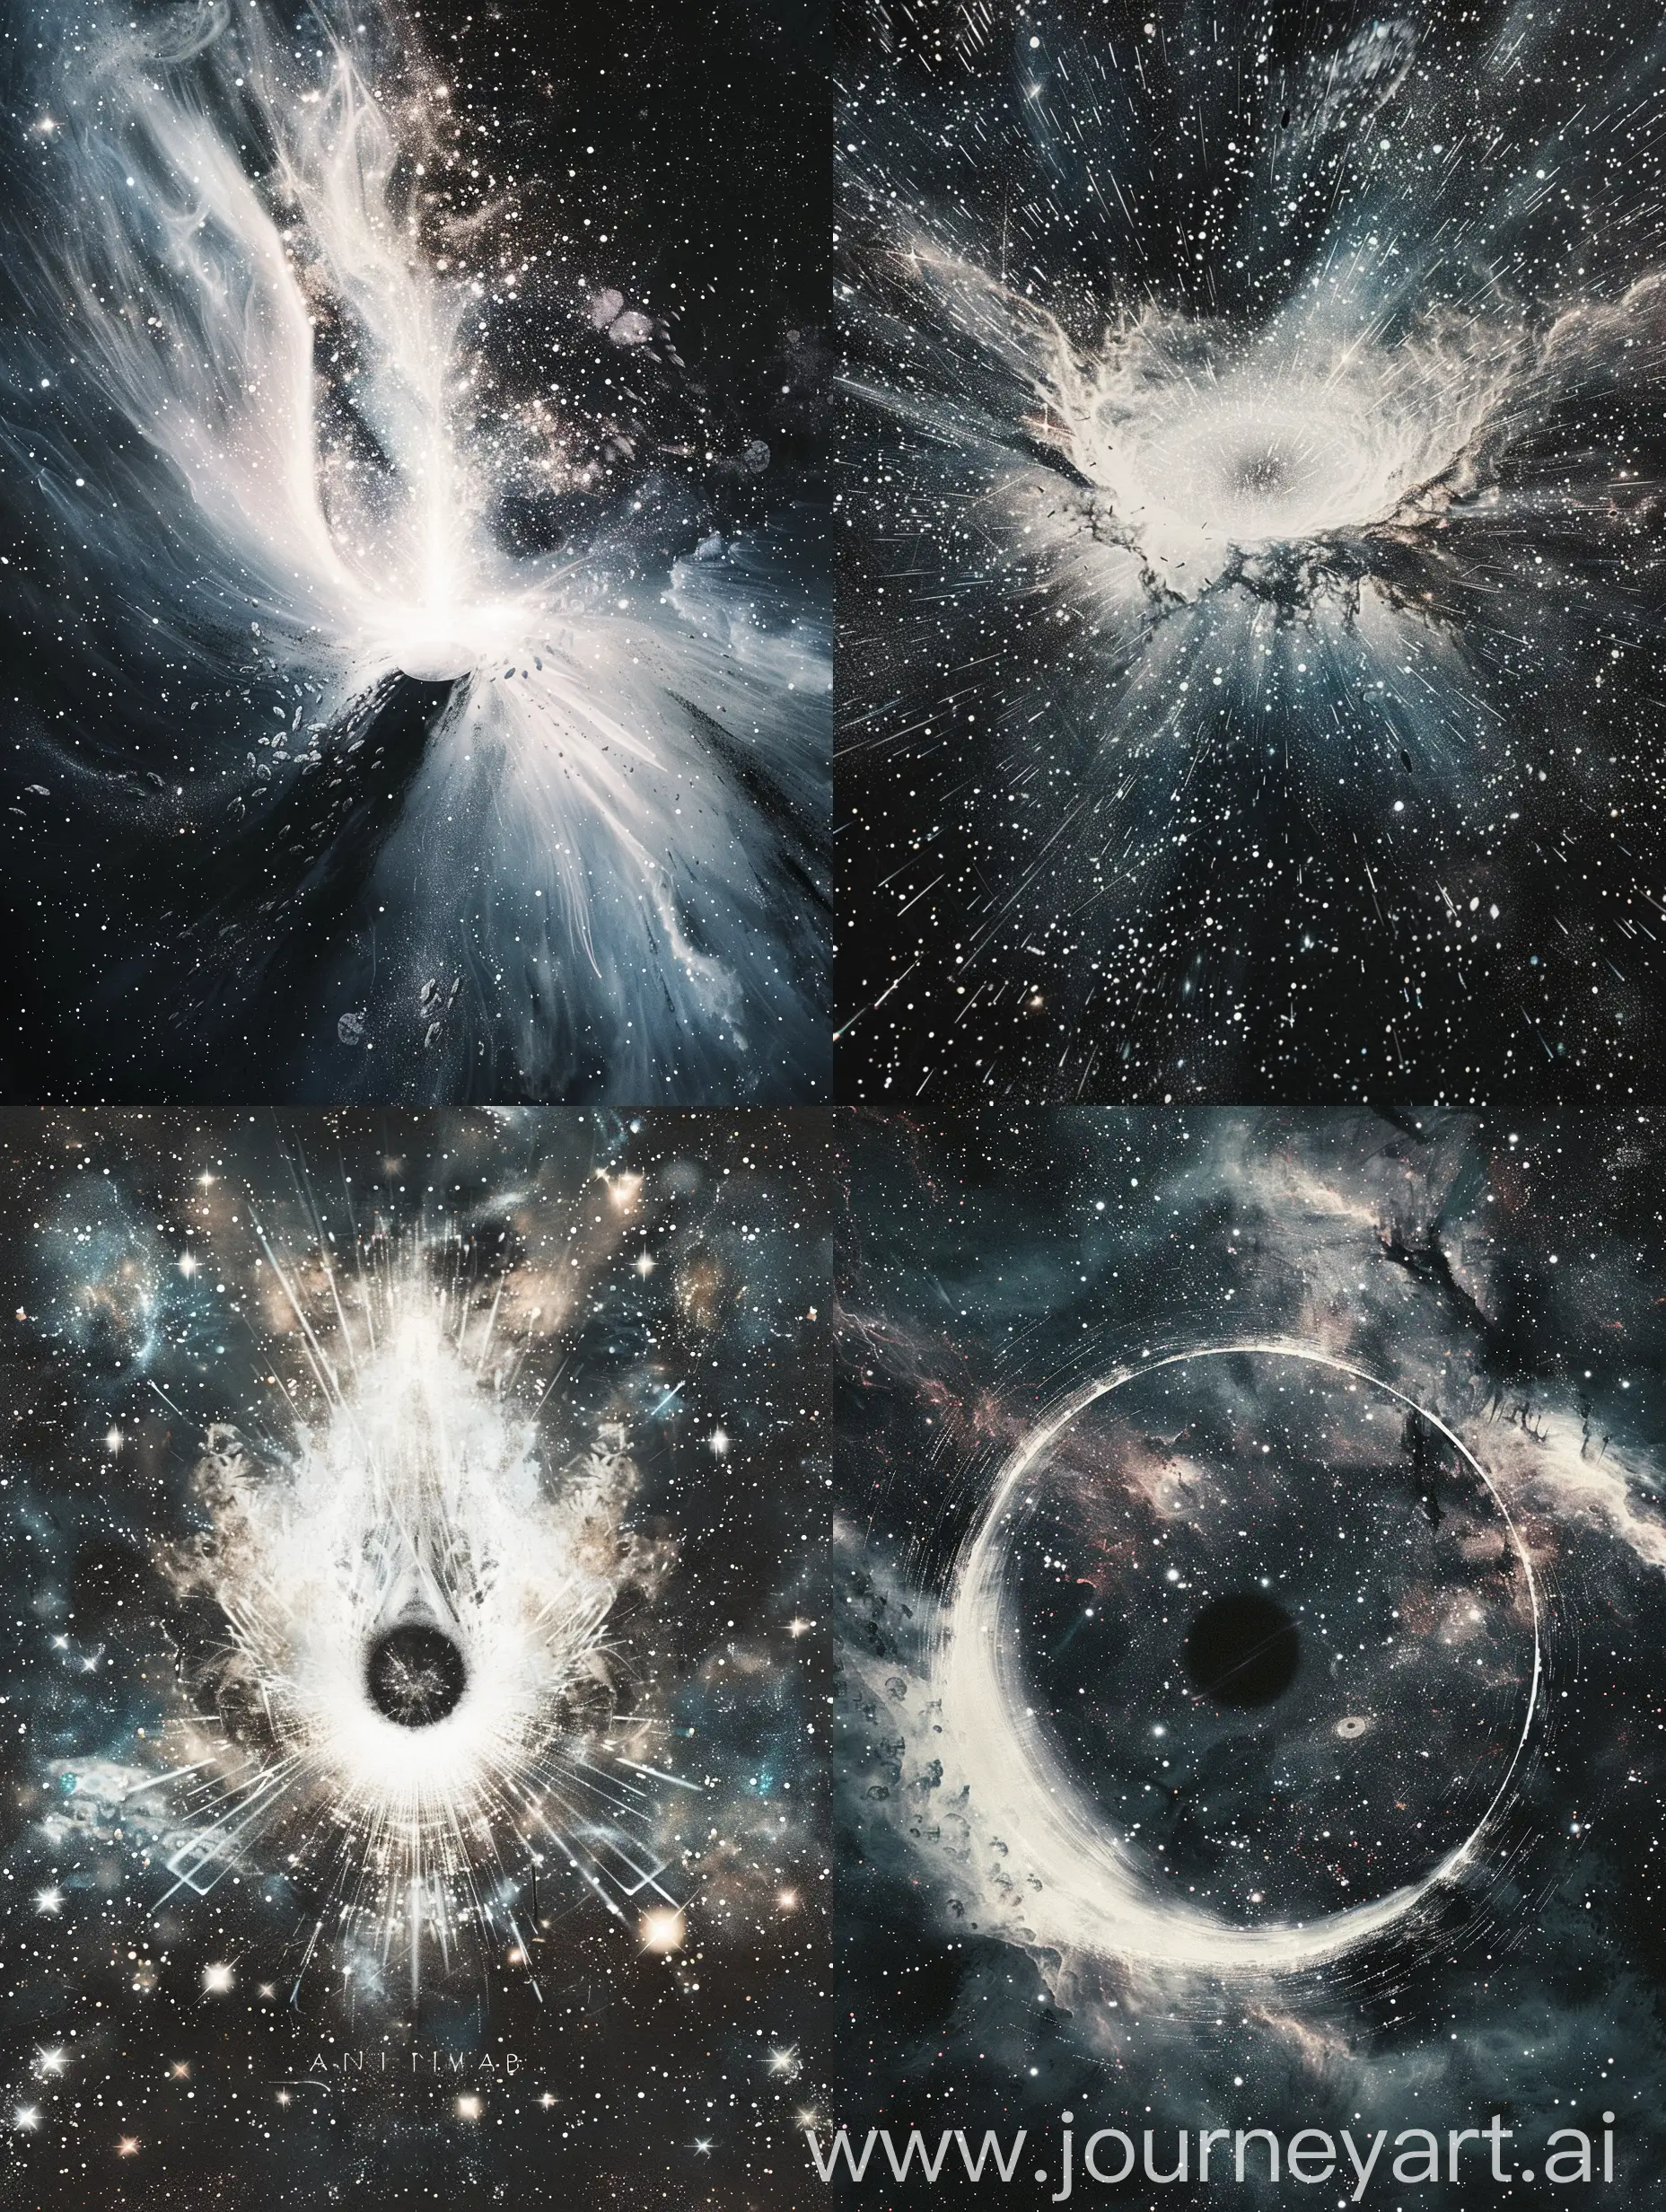 Interstellar-Movie-Poster-with-Dark-Fantasy-Atmosphere-and-Glowing-White-Black-Hole